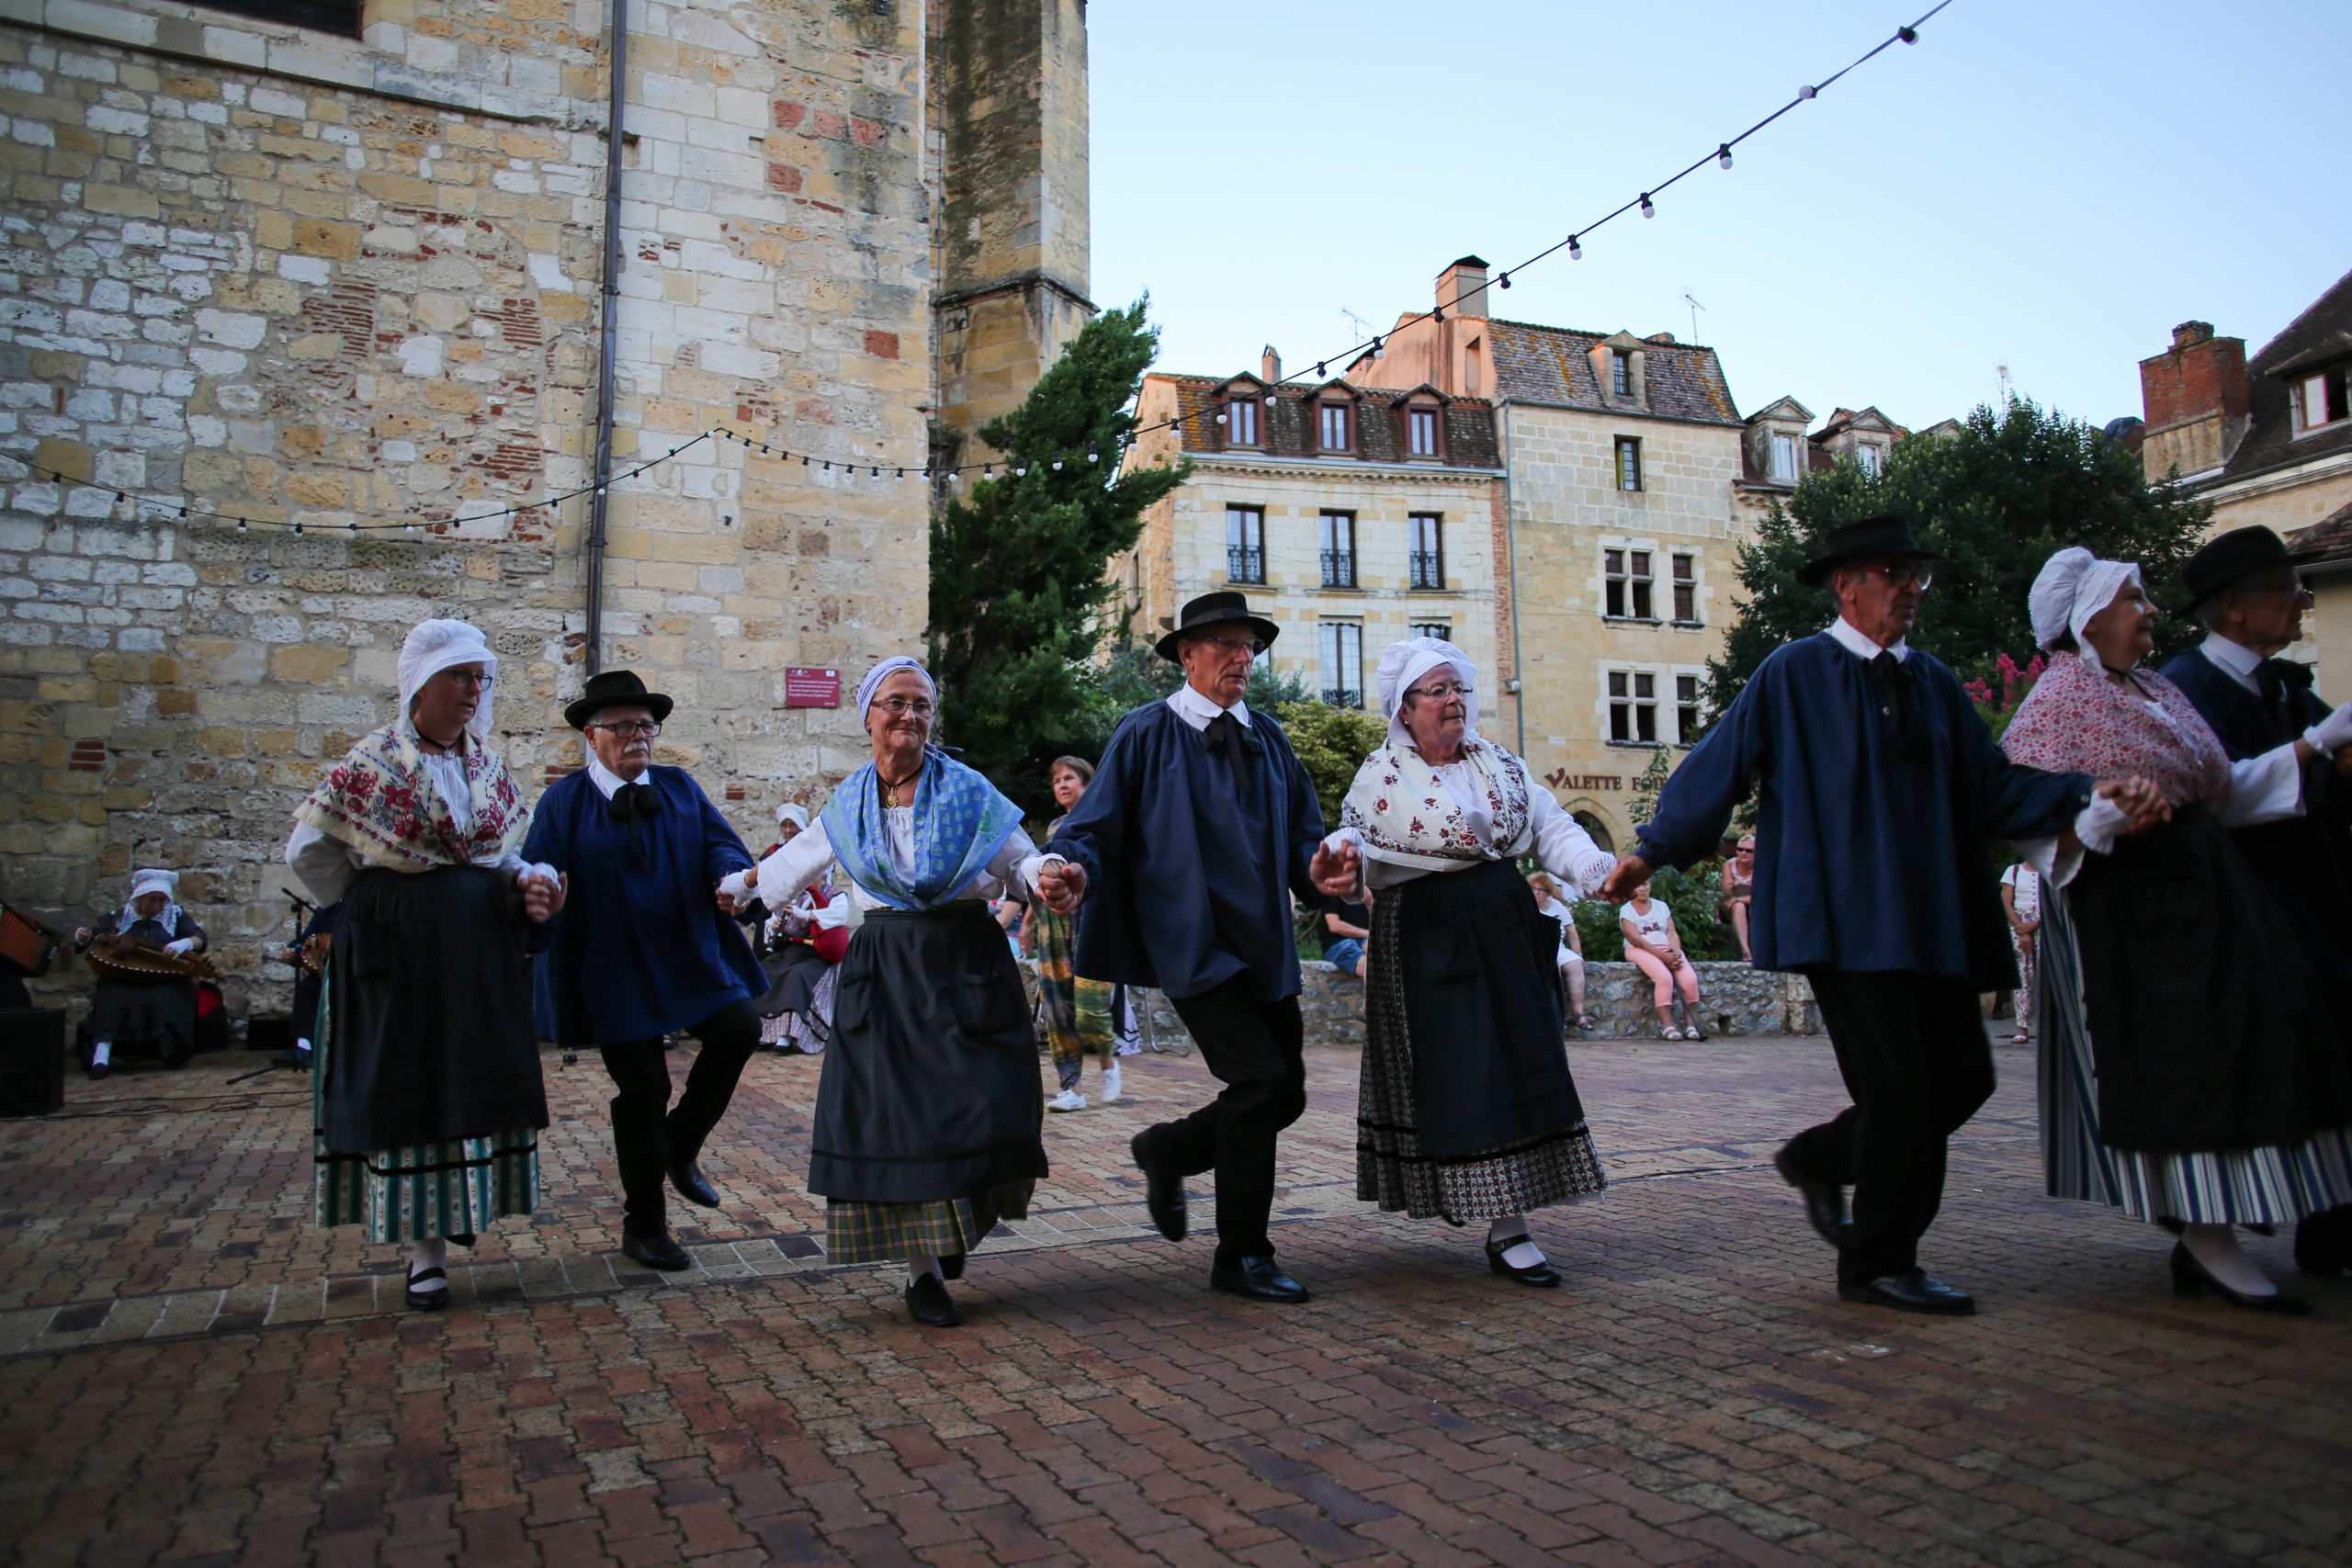 Folk Dances in Bergerac, France